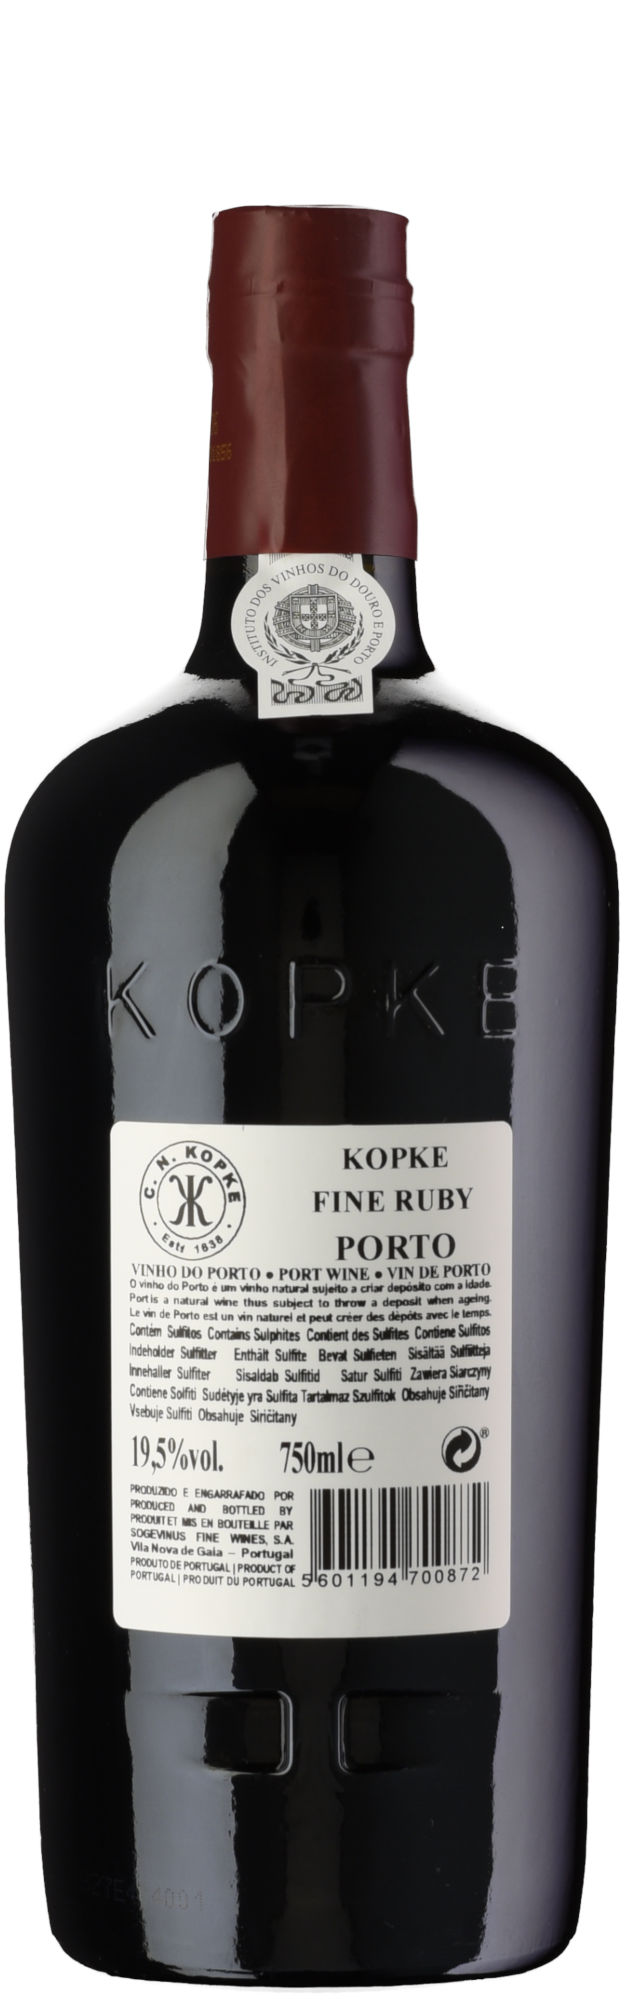 Kopke-Ruby-Port-back